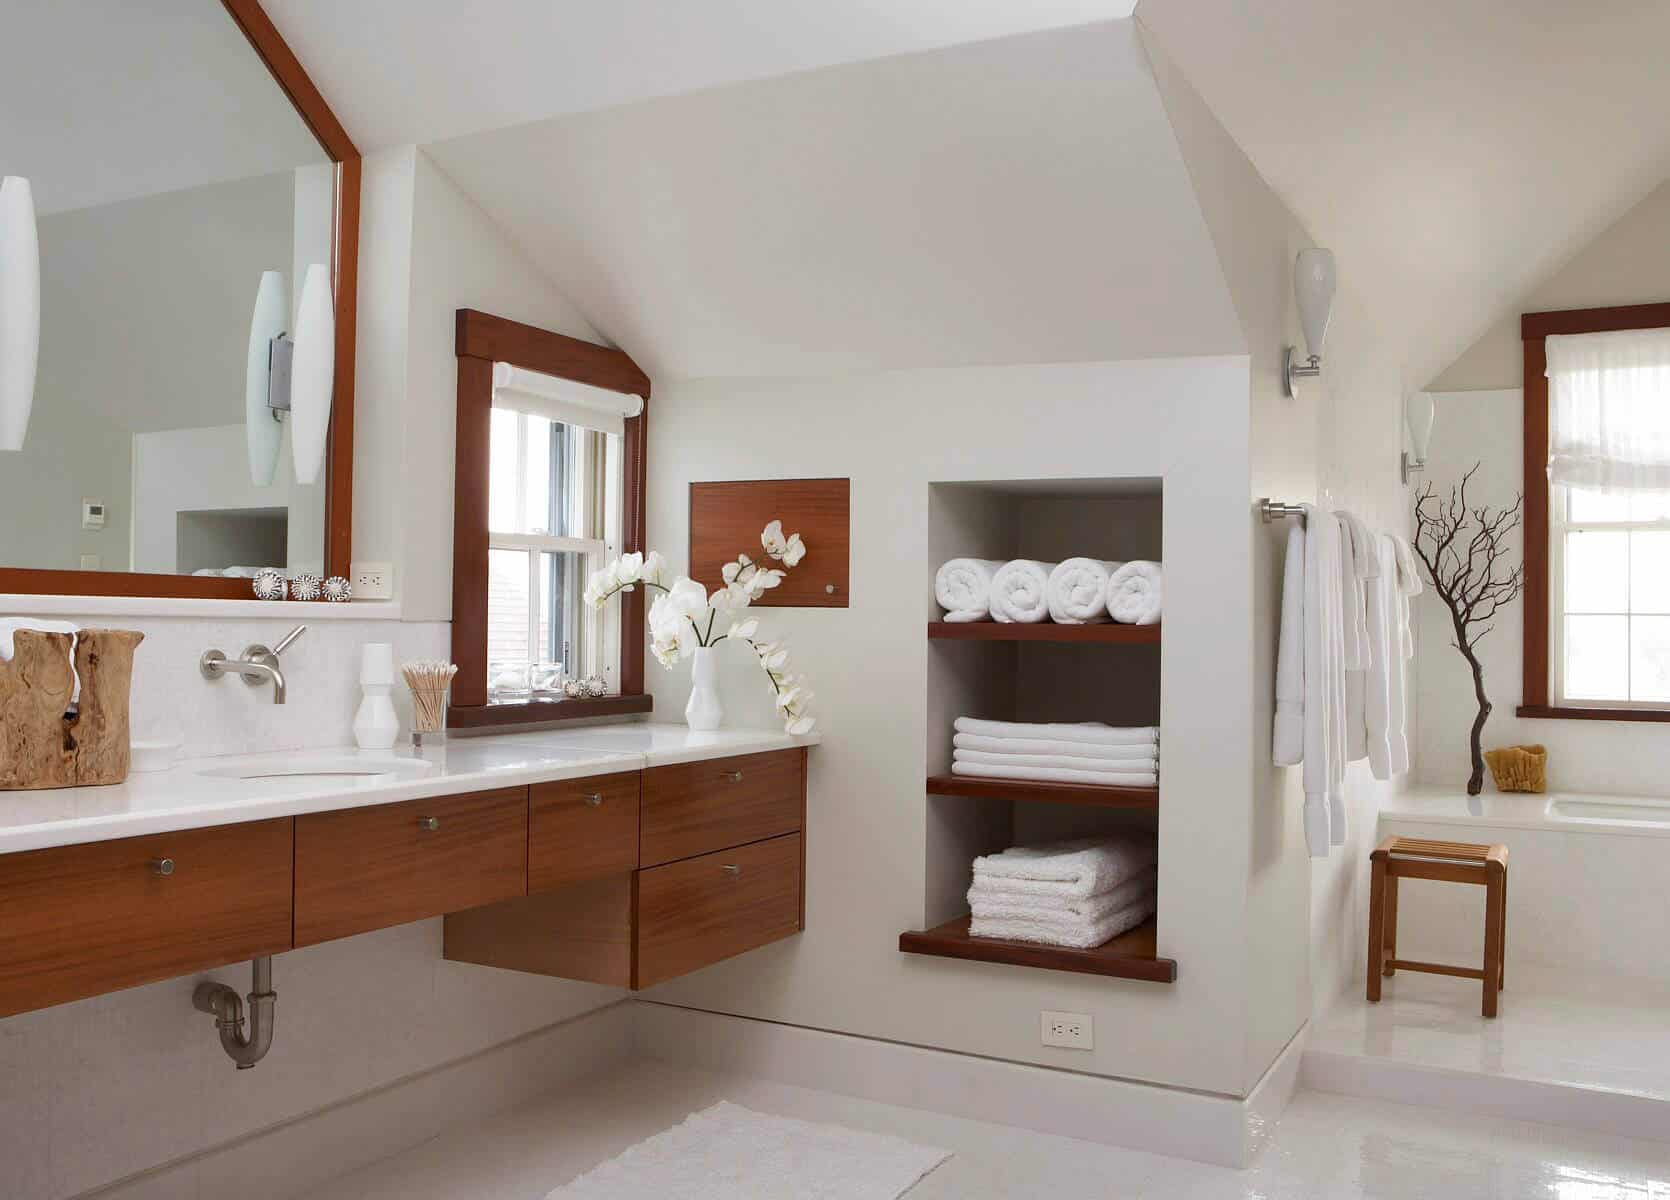 Towel Storage Ideas For Your Bathroom, Bathroom Shelf Ideas For Towels